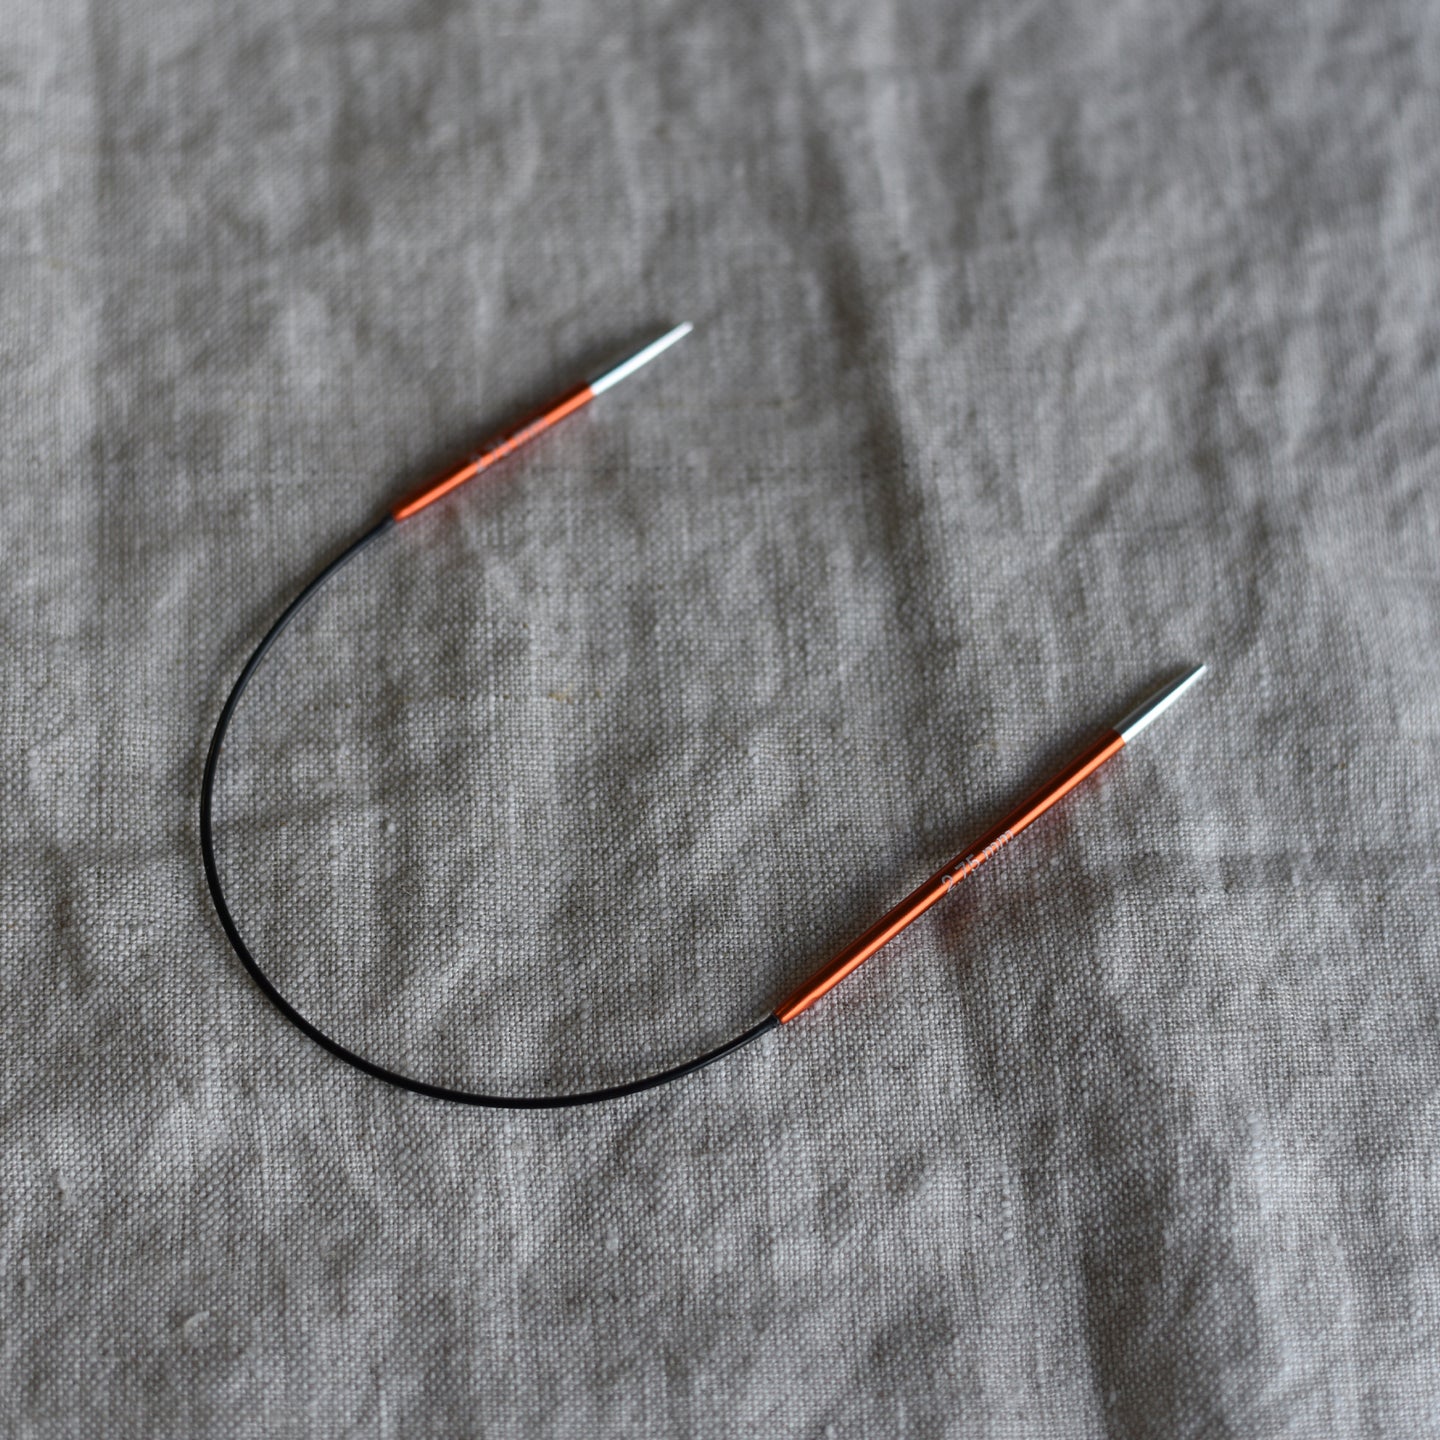 Knitpro Zing Sock cable needles - 2.75mm & 25cm length